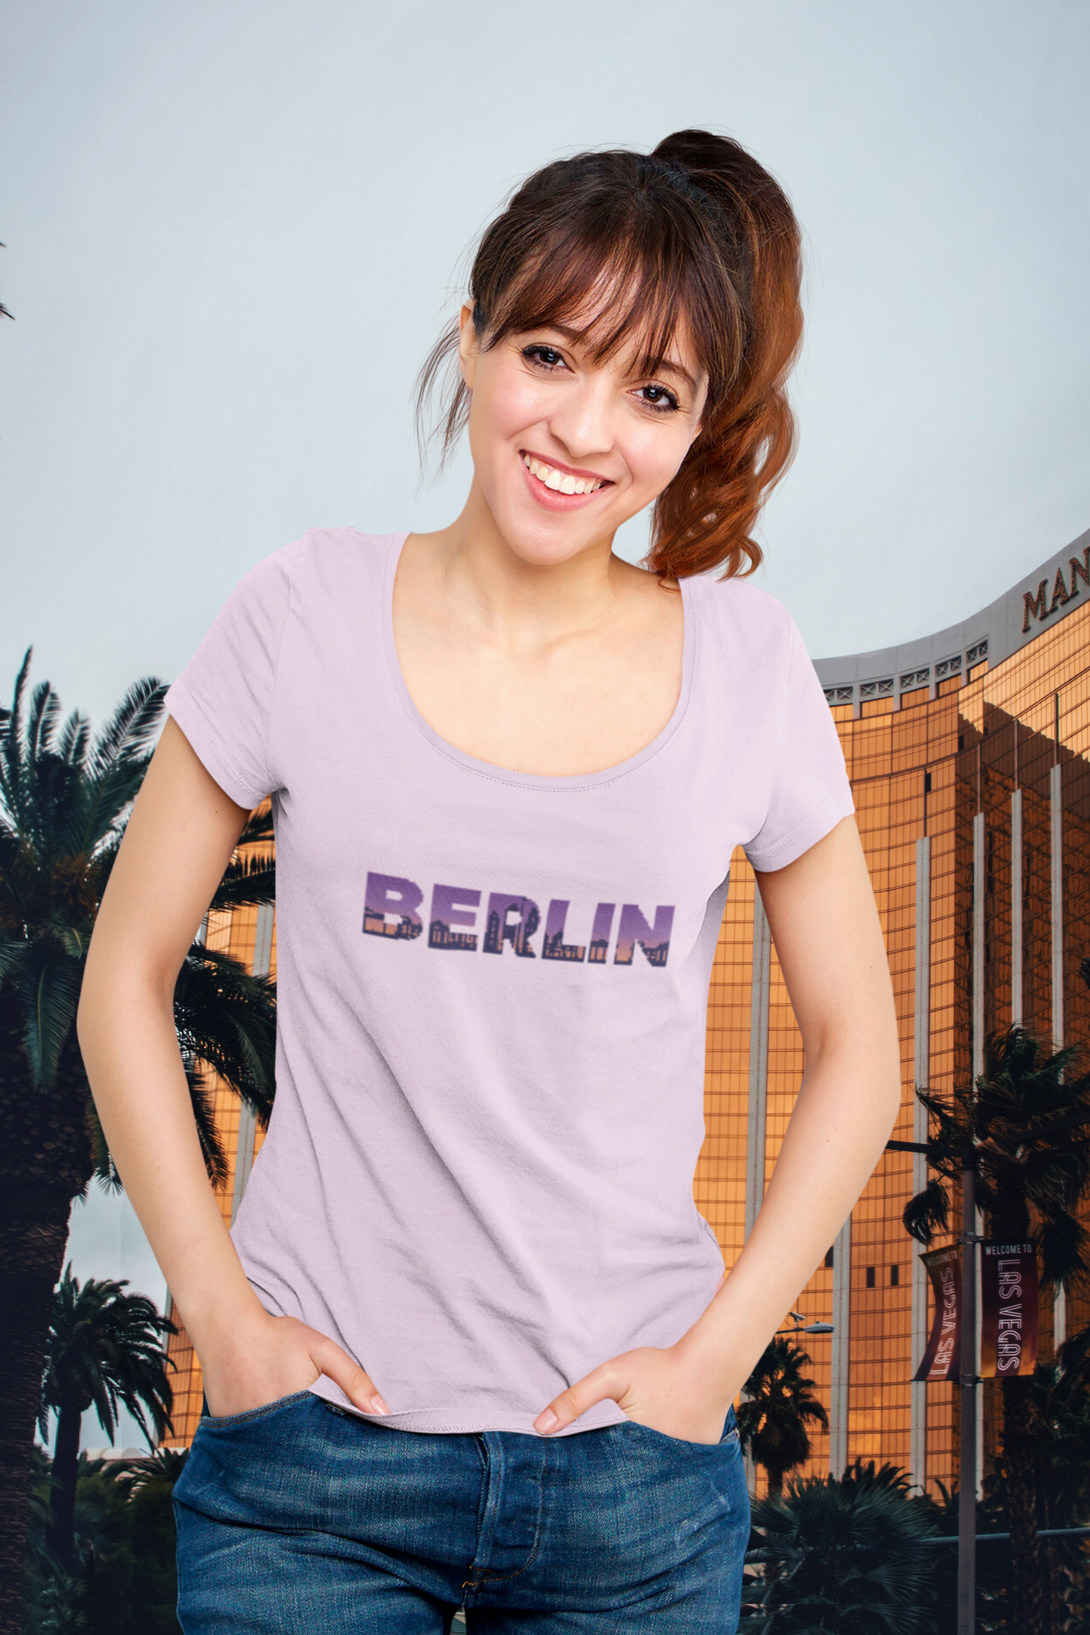 Berlin Skyline Printed Scoop Neck T-Shirt For Women - WowWaves - 2